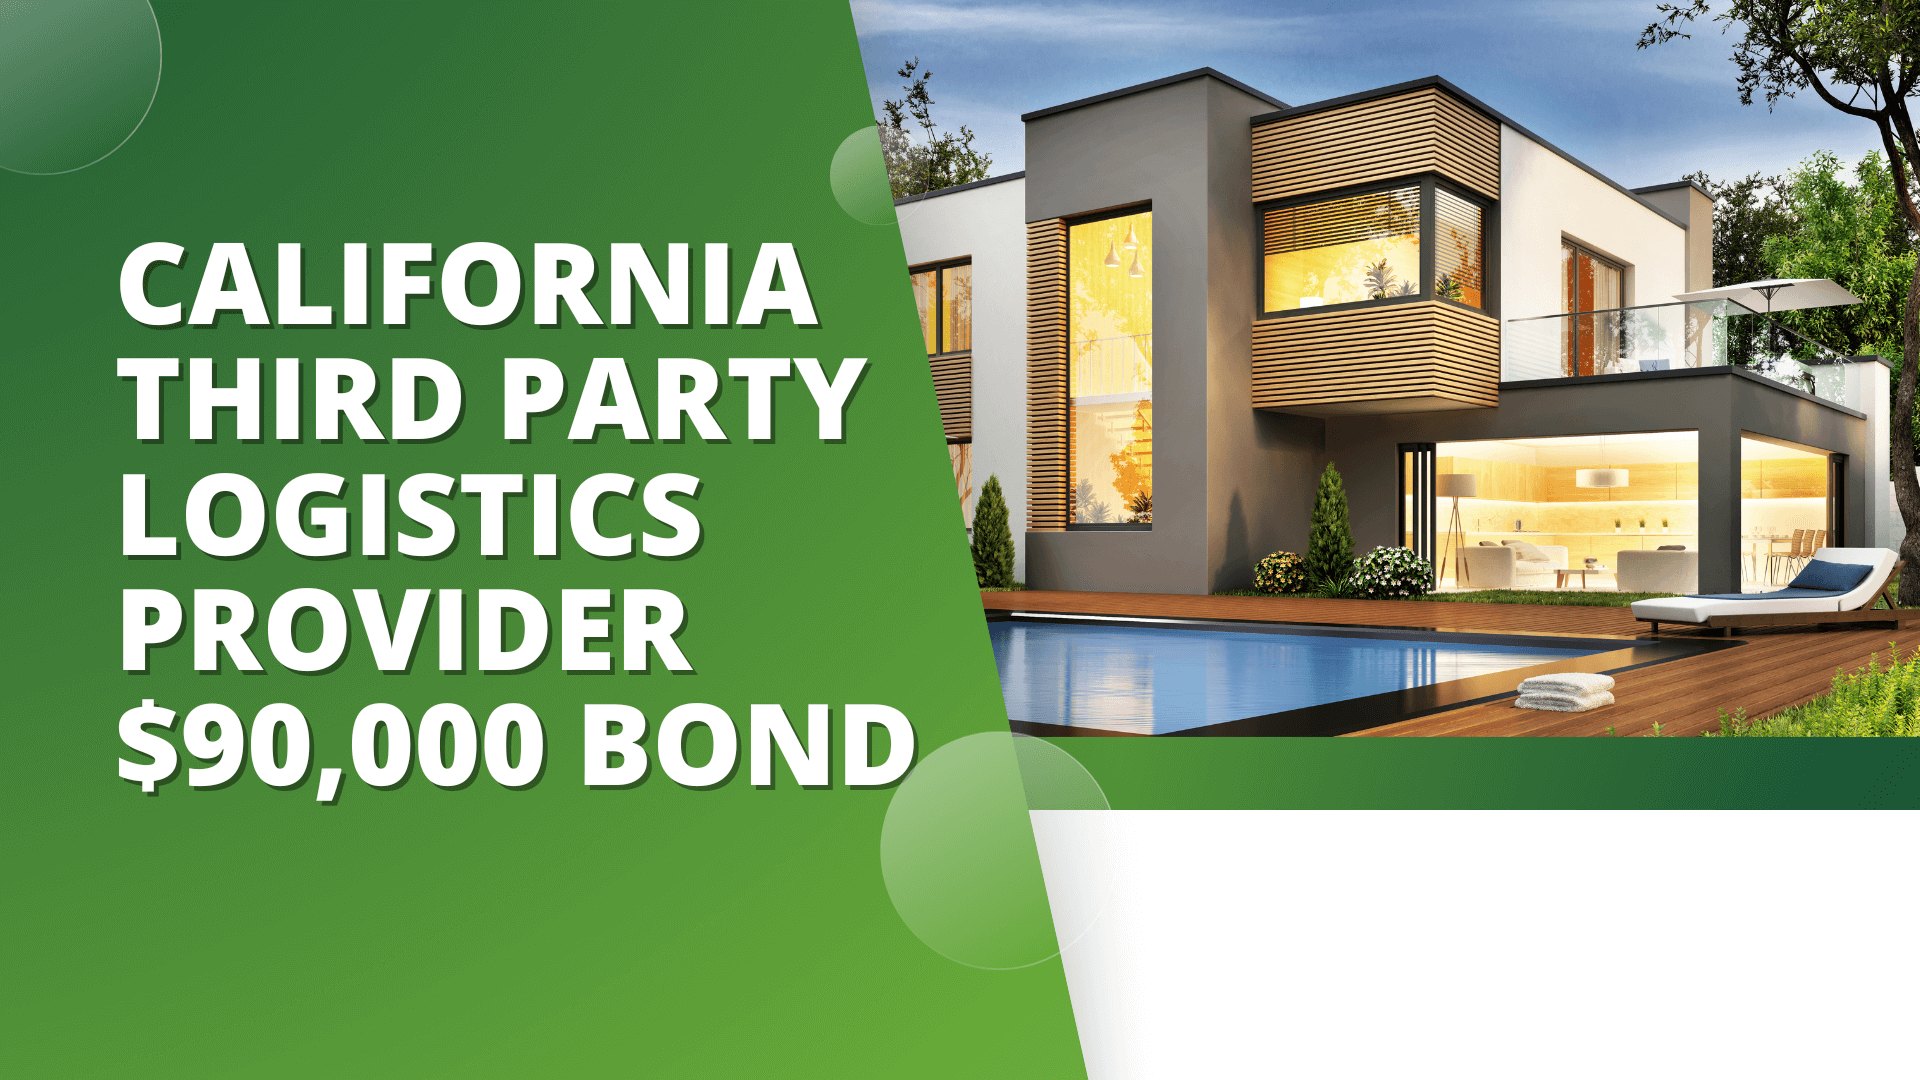 Surety Bond - California Third Party Logistics Provider $90,000 Bond